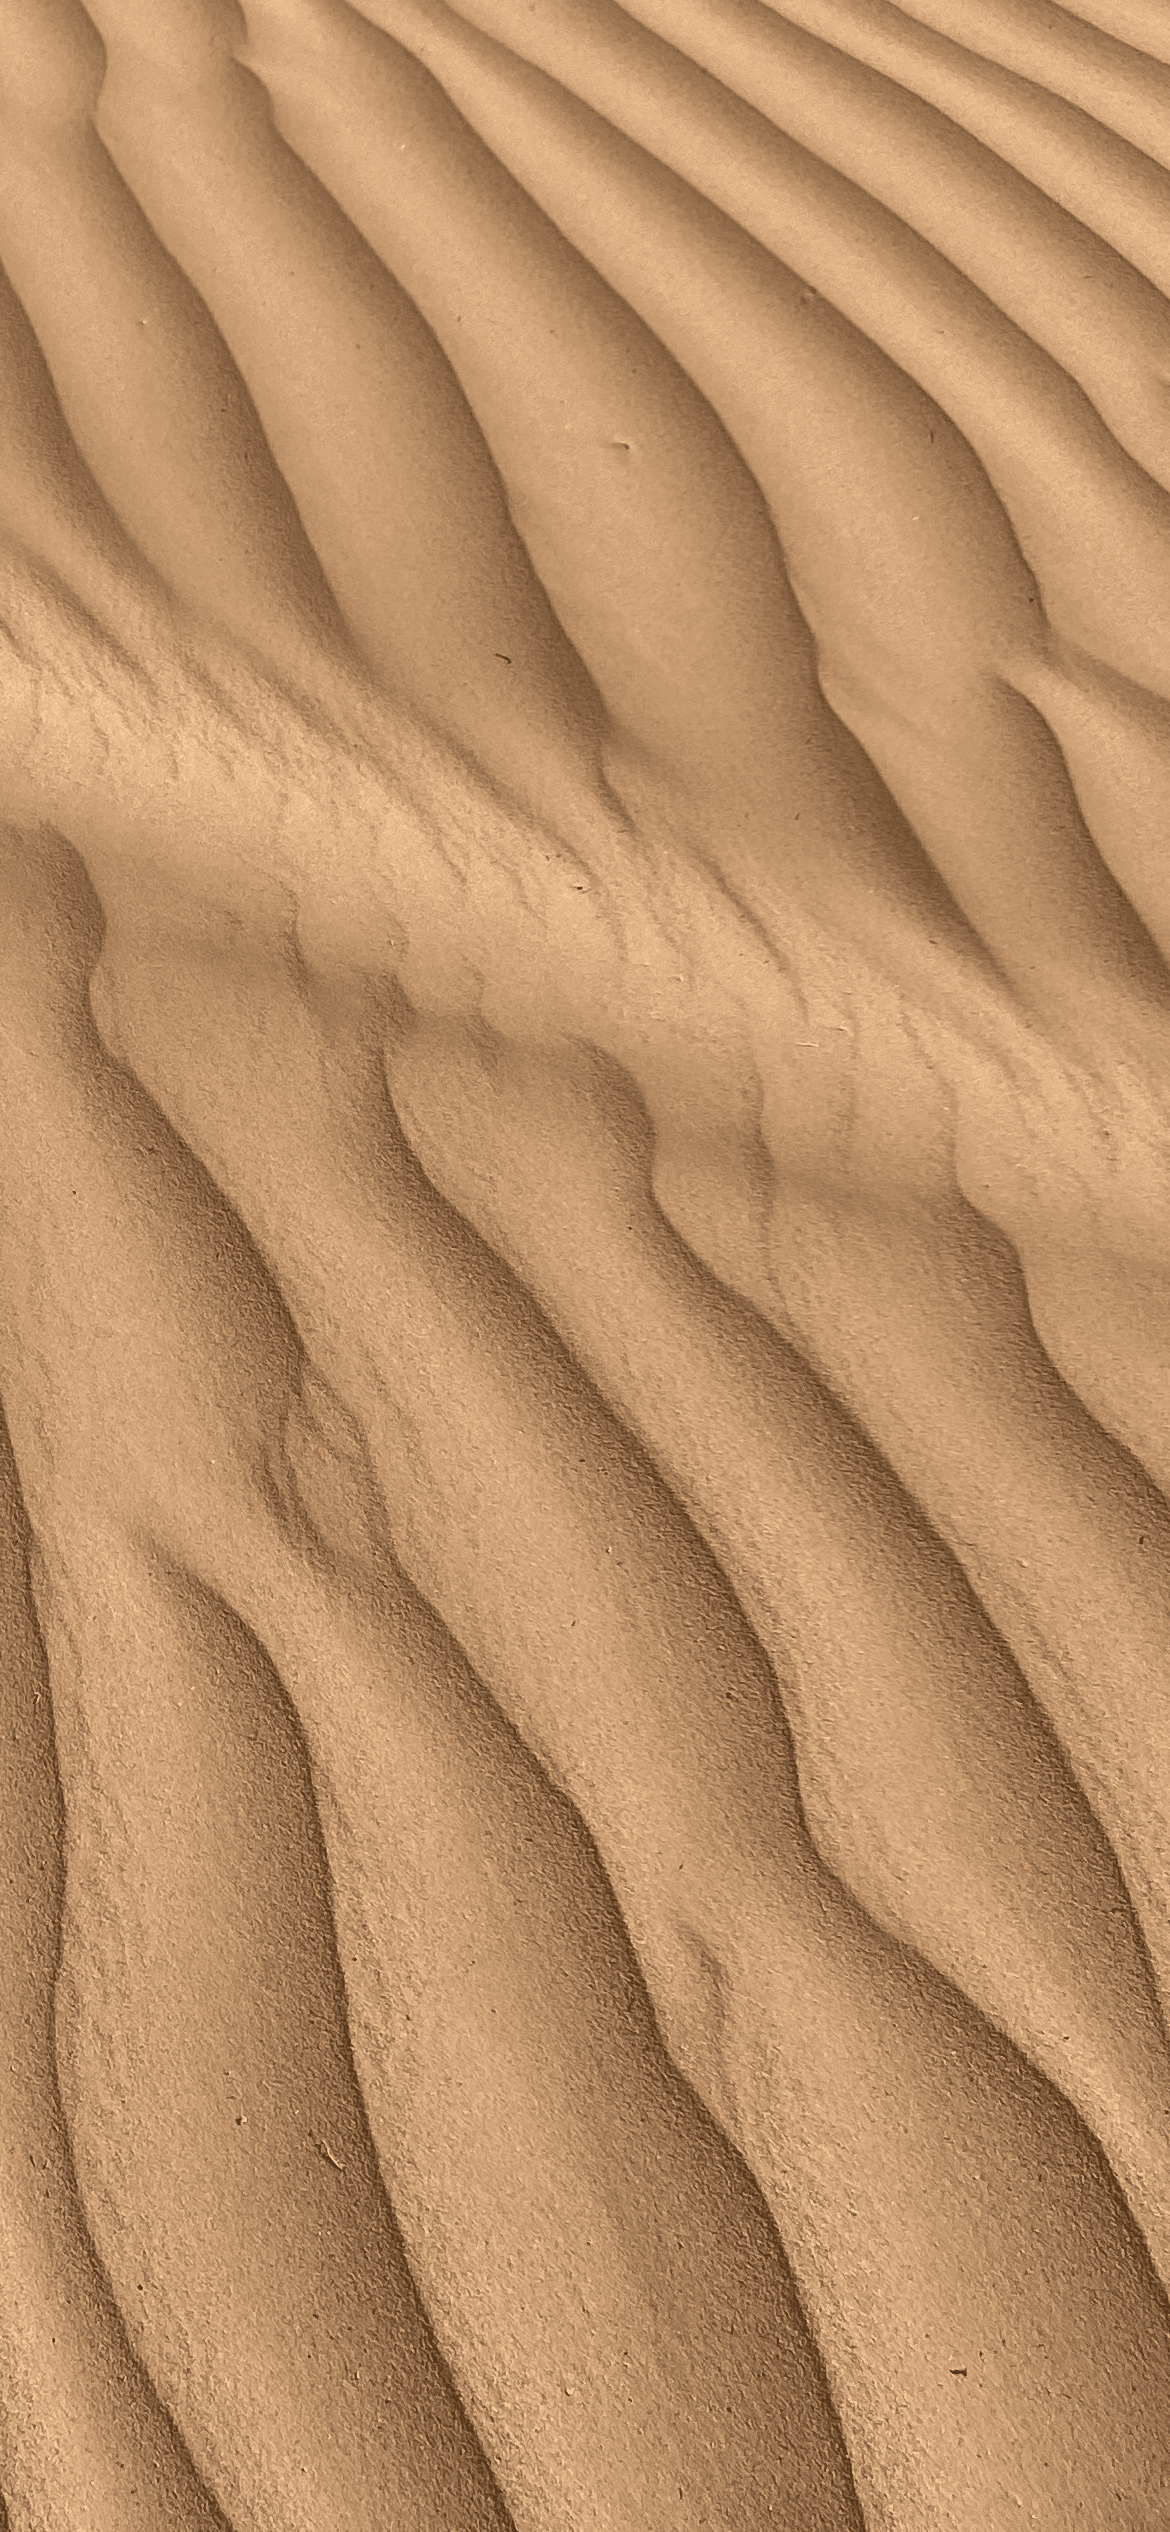 Sahara Sands #05